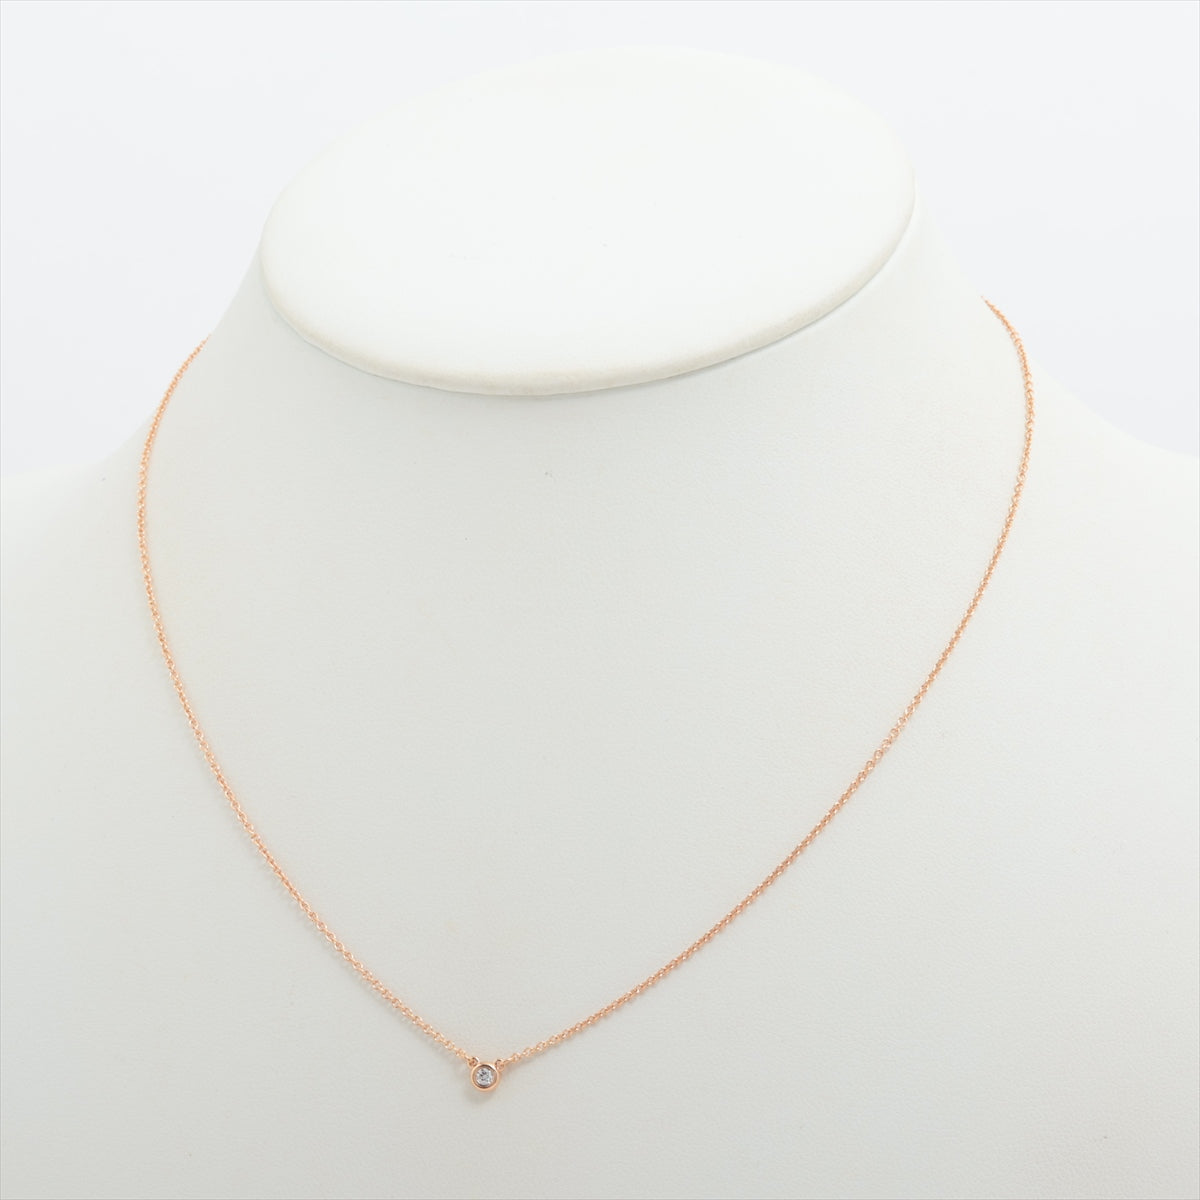 Tiffany Bazaar 1P diamond necklace 750 (PG) 2.1g diameter approximately 3.76mm